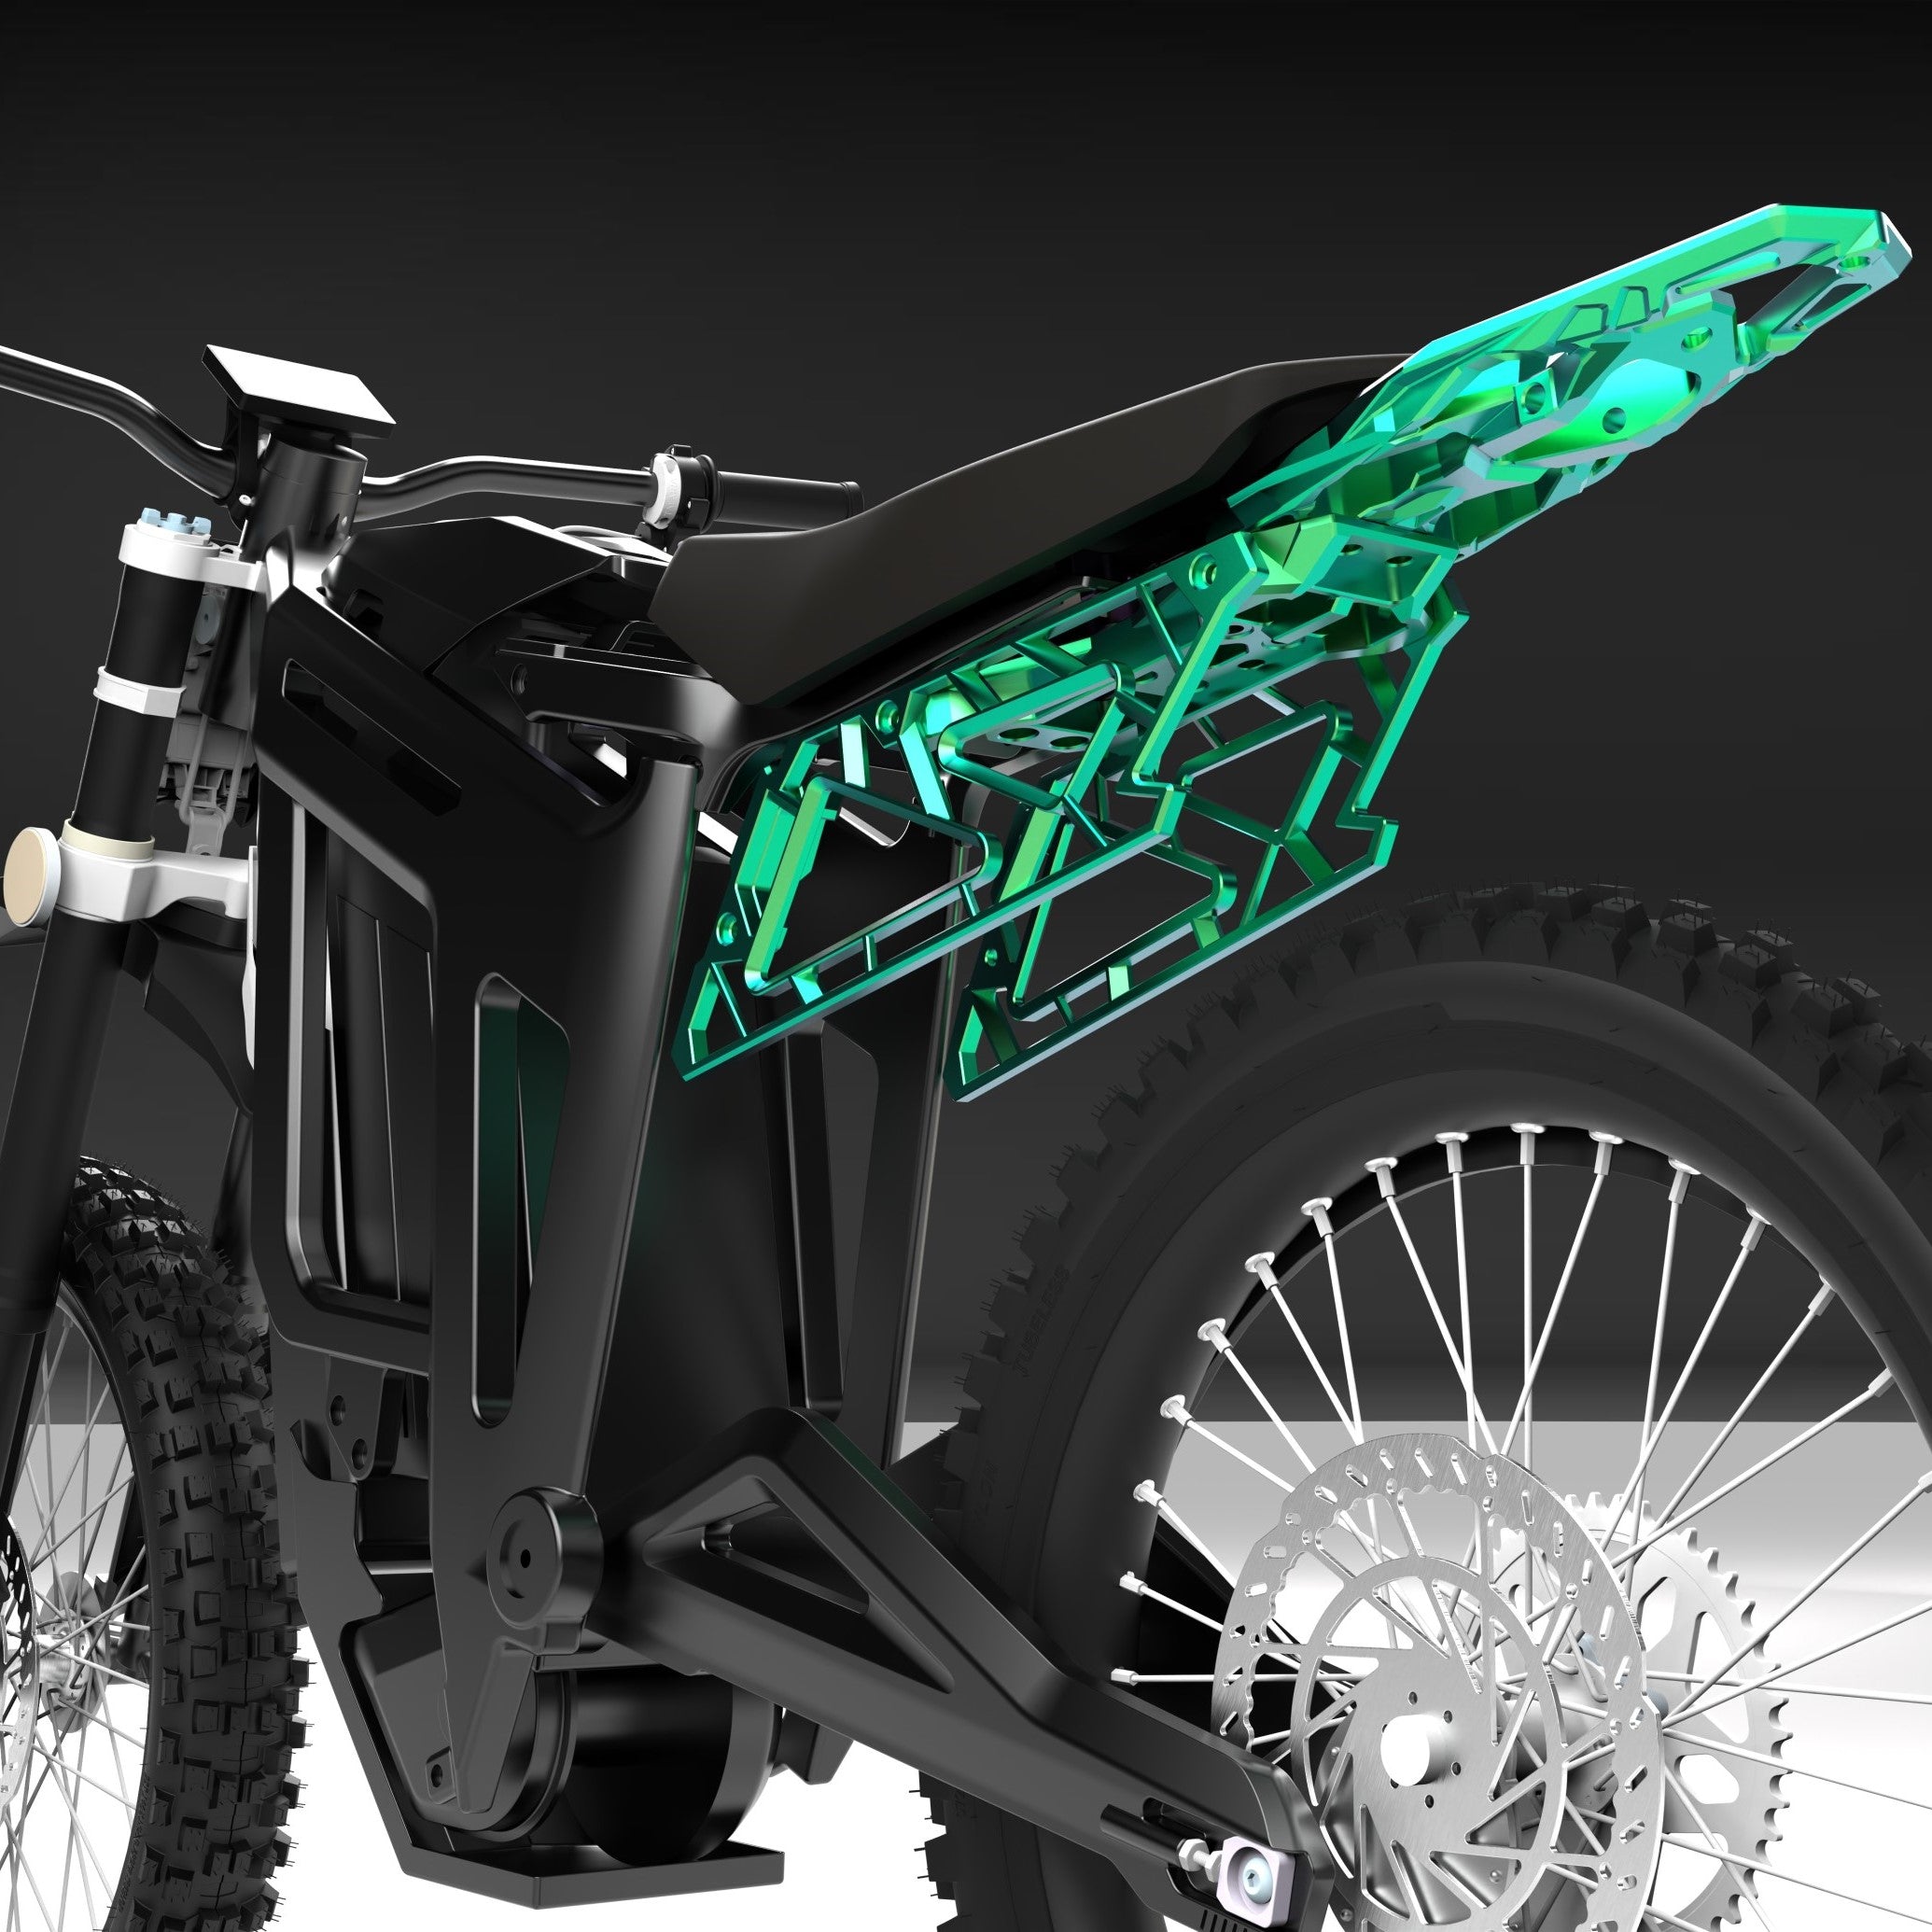 Talalari MX4 Rack's design has been finalized